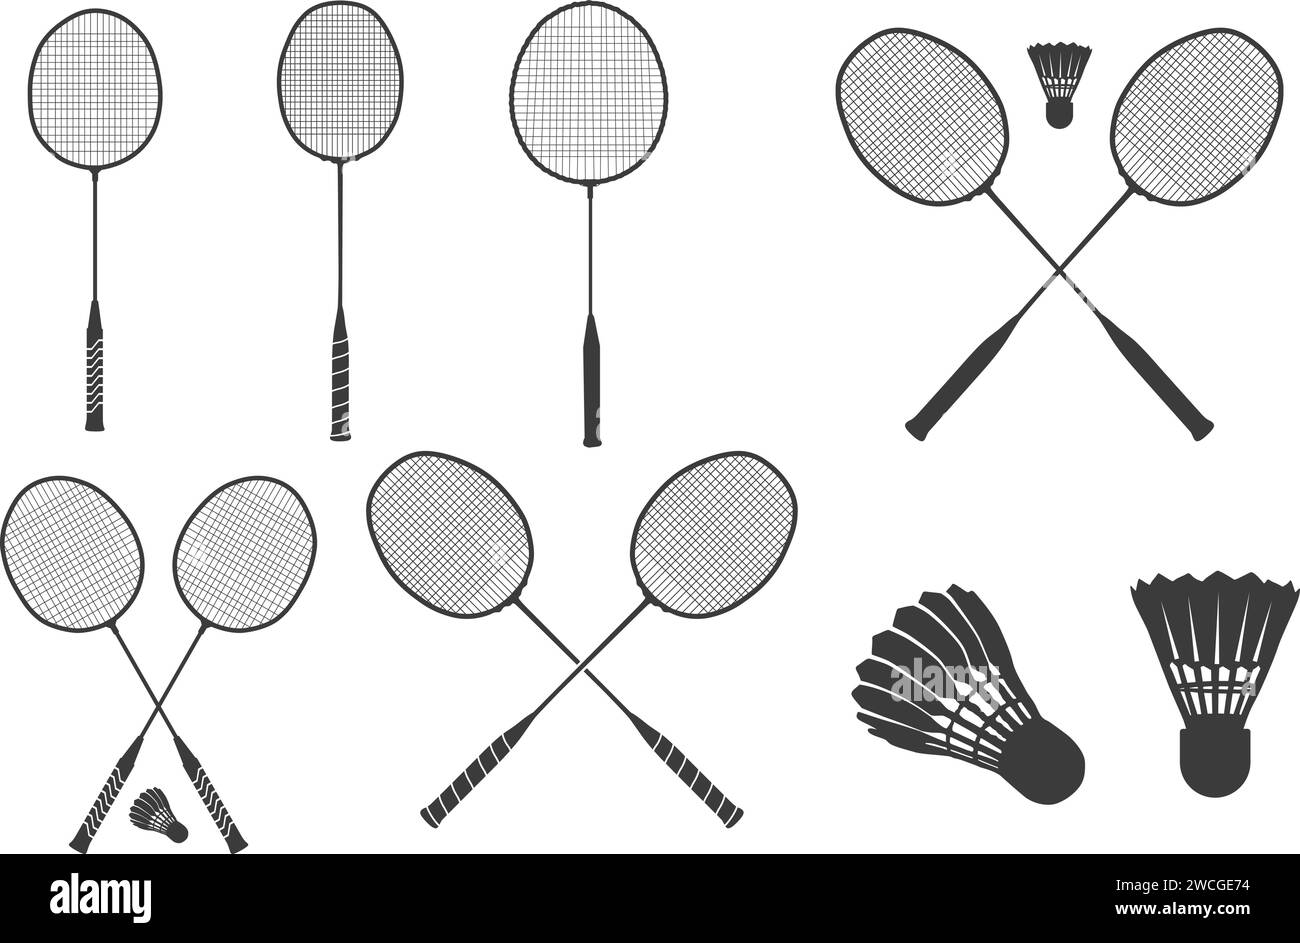 Badminton Racket Silhouette, Badminton Racket und Shuttlecock Silhouette, Badminton Racket Clipart, Racket Silhouette Stock Vektor